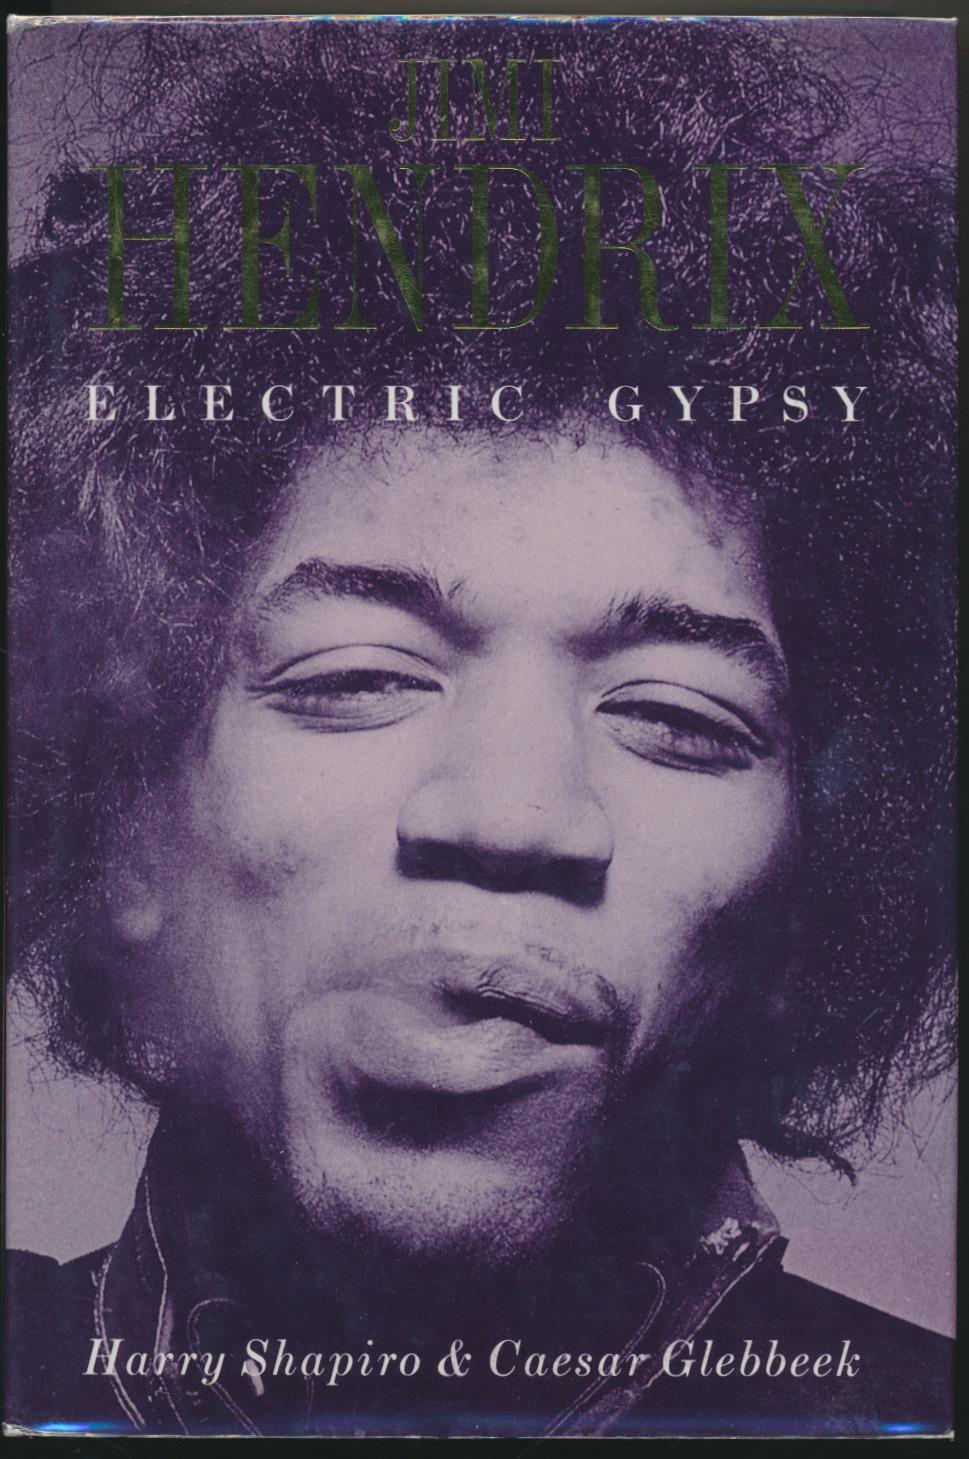 Jimi Hendrix: Electric Gypsy